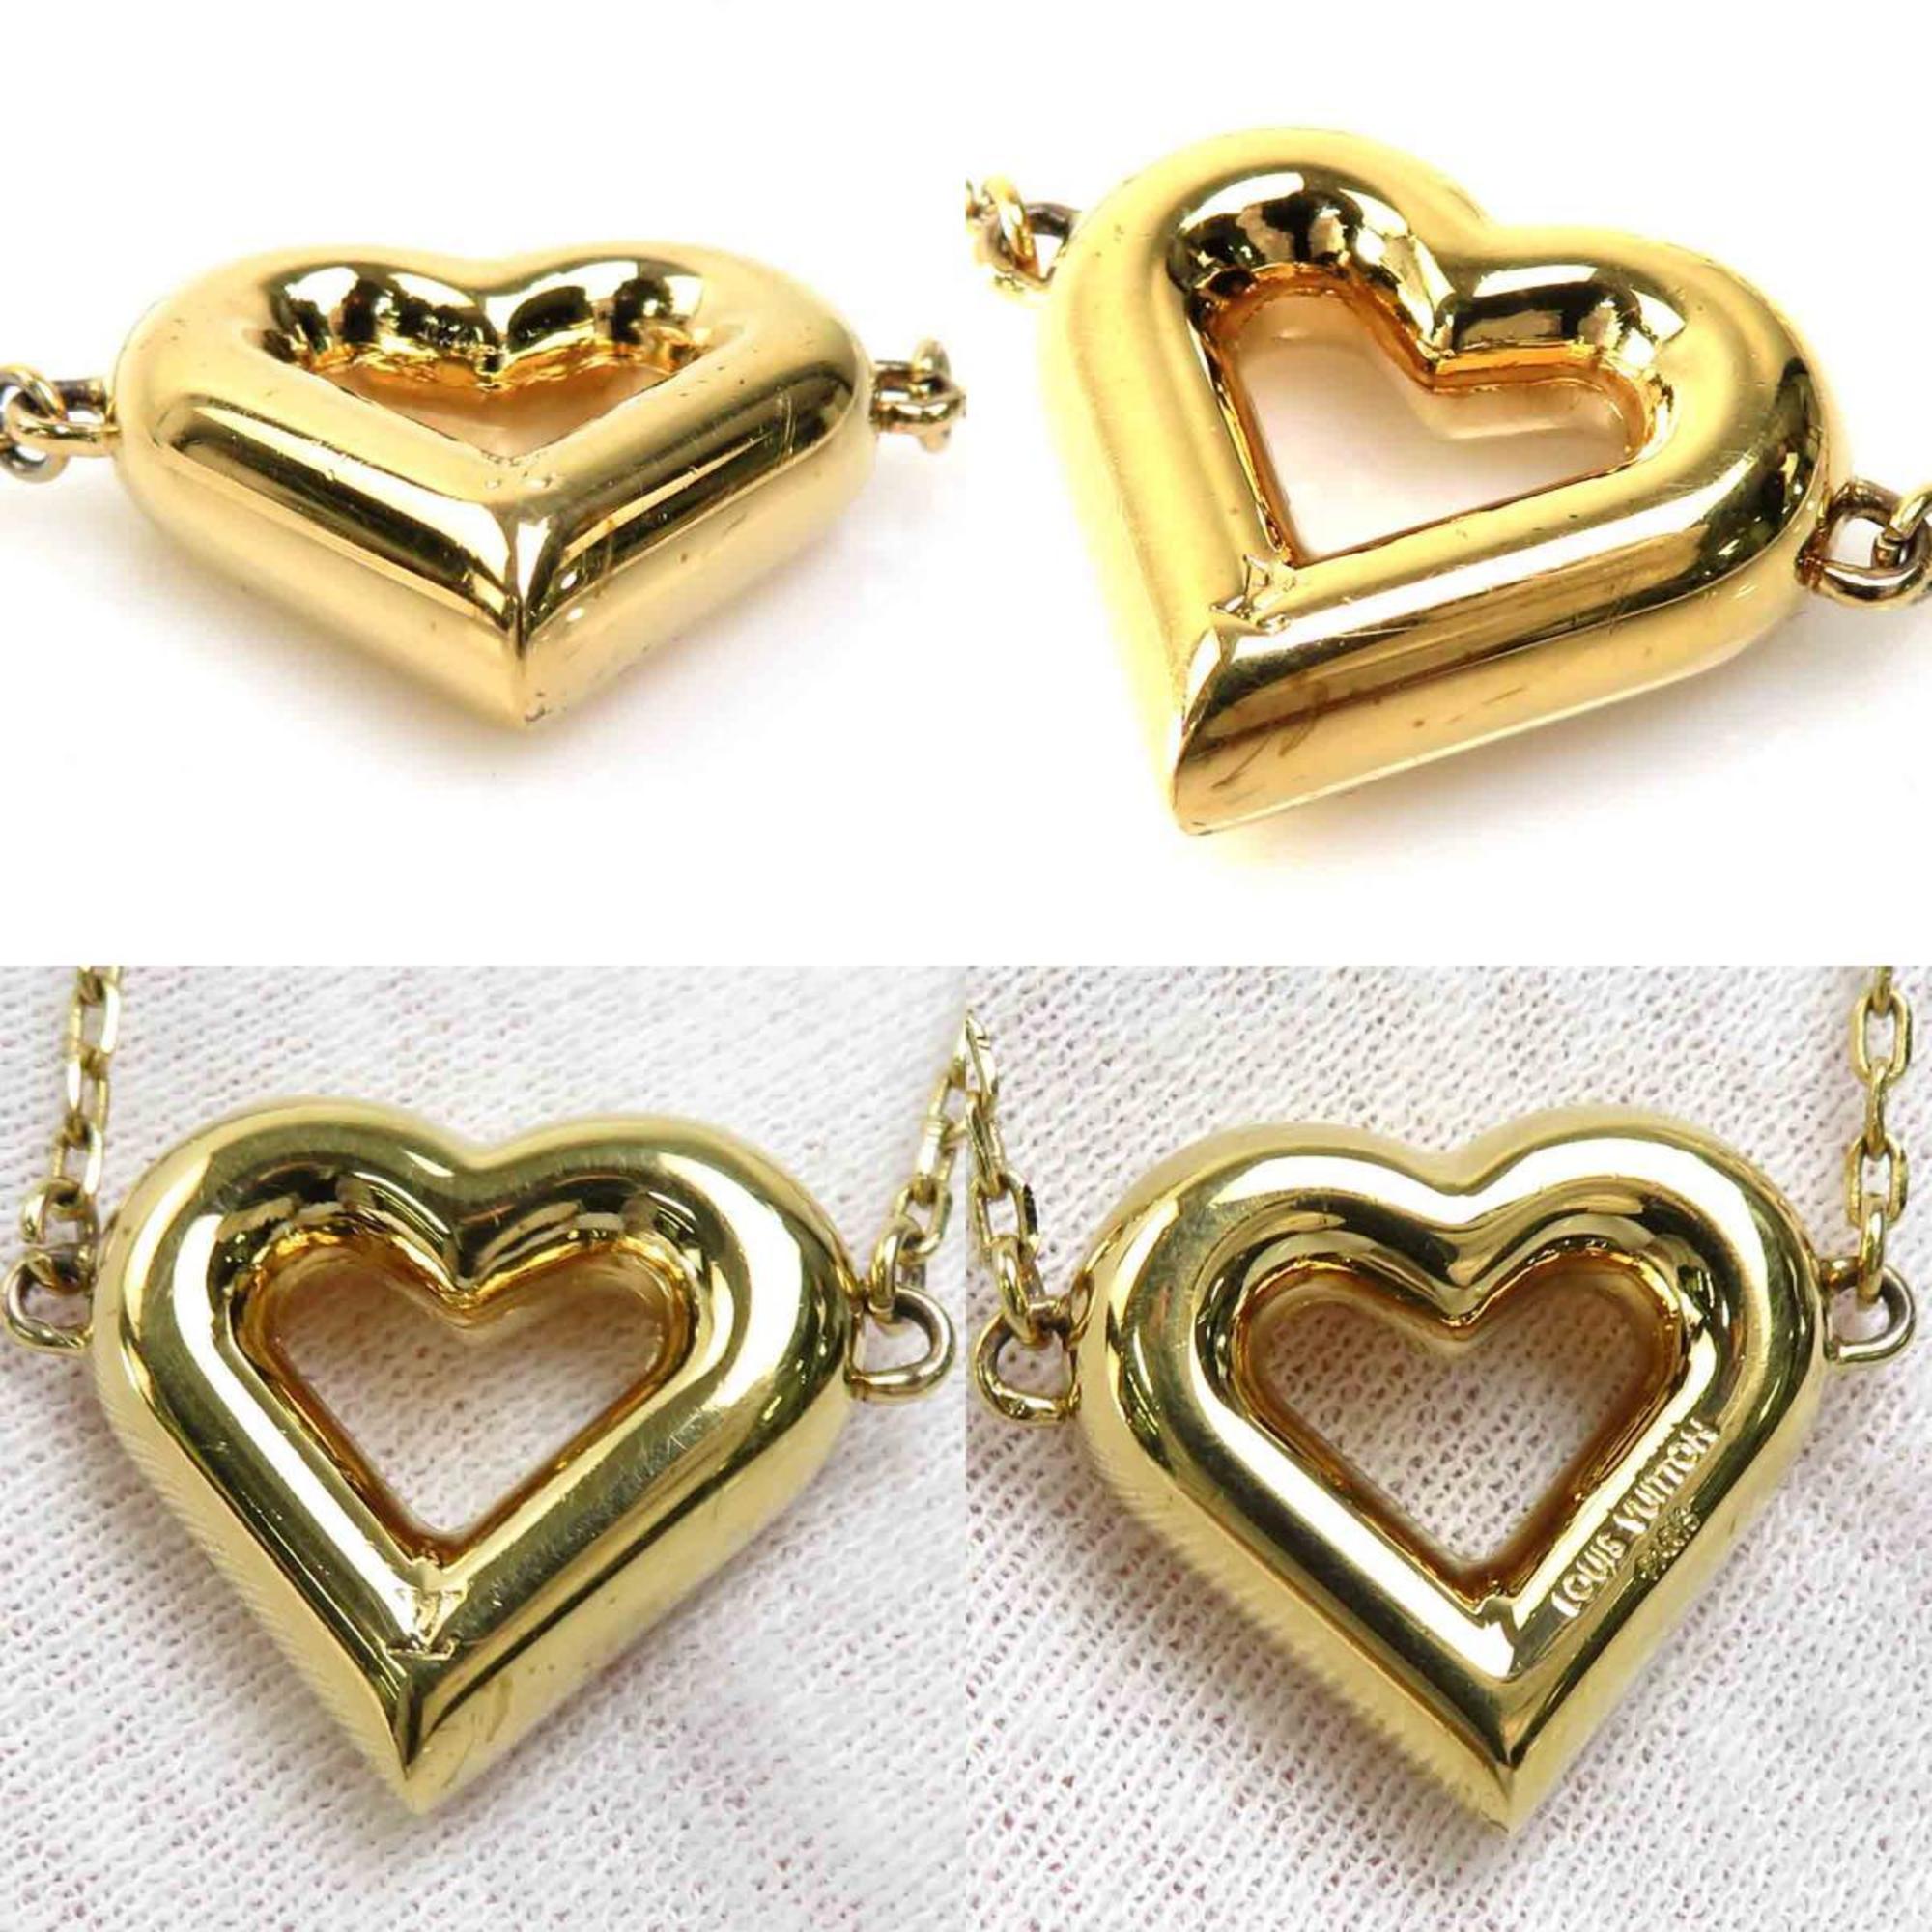 PRELOVED Louis Vuitton Gold LV and Me Heart Bracelet OB1104 012924